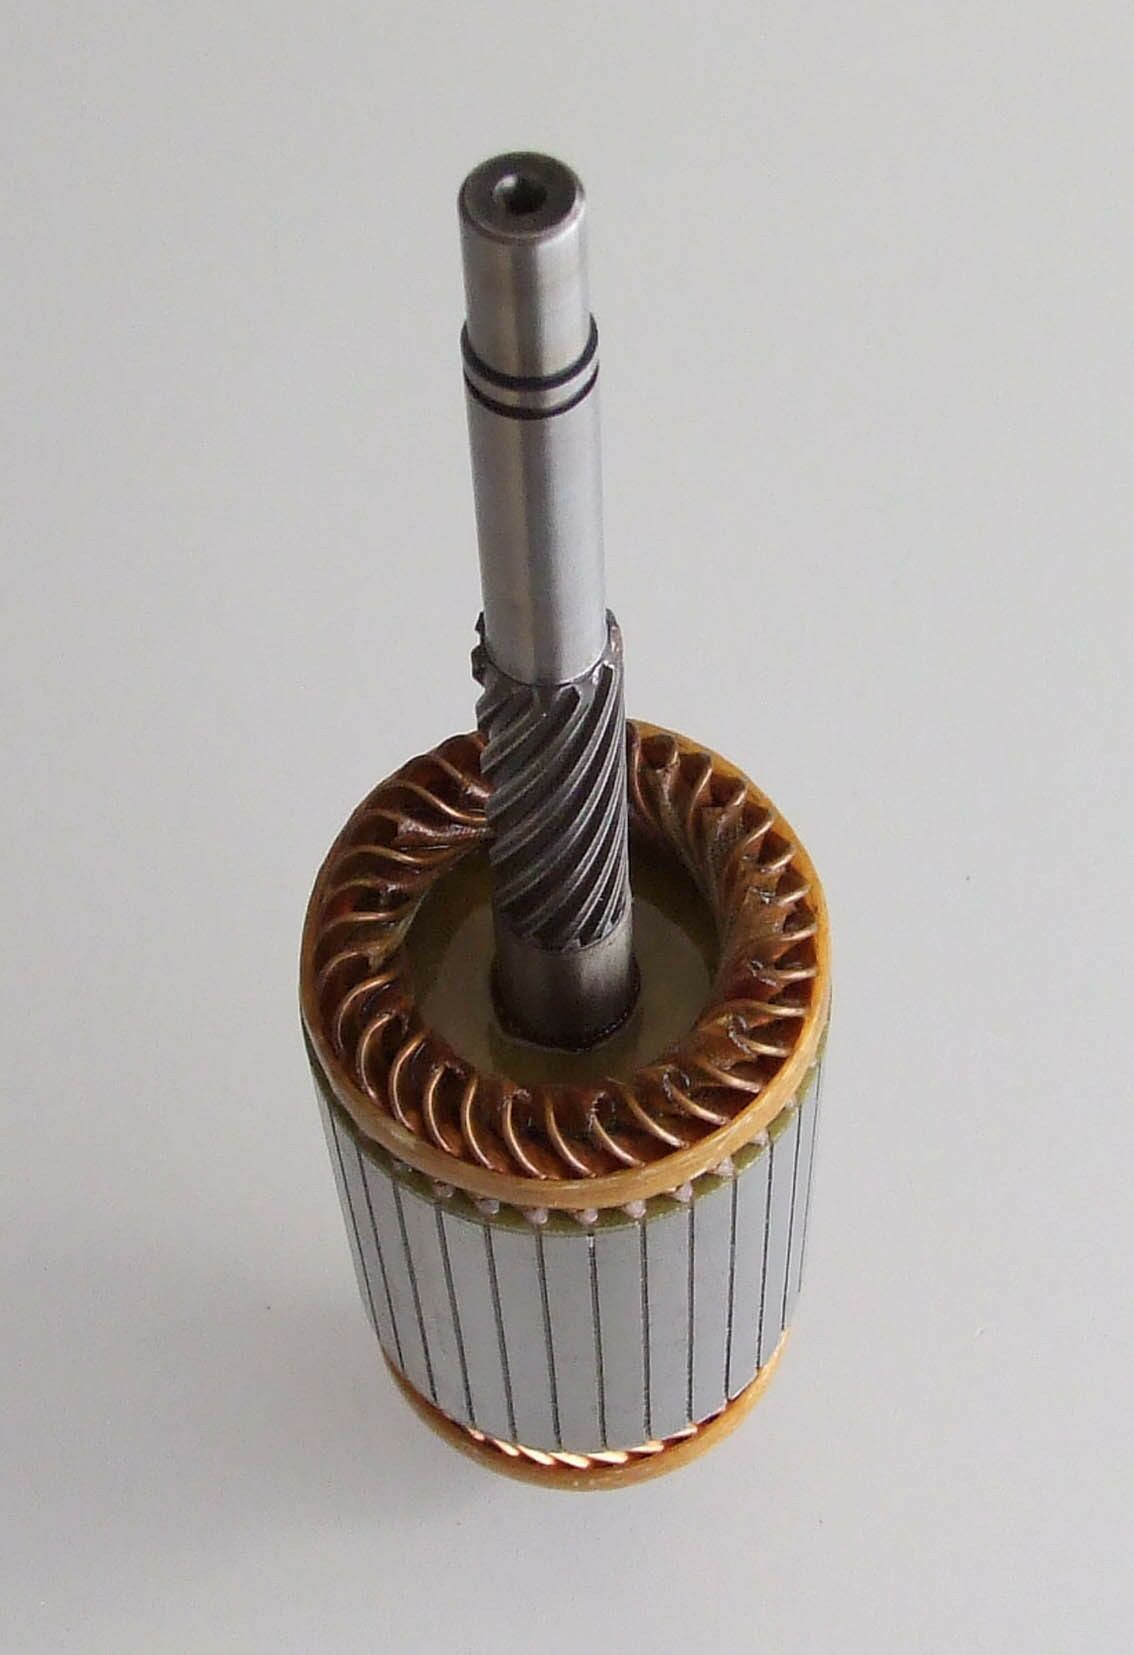 Rotor elektropokretaca bosch 24v 12-13 mercedes duga spirala